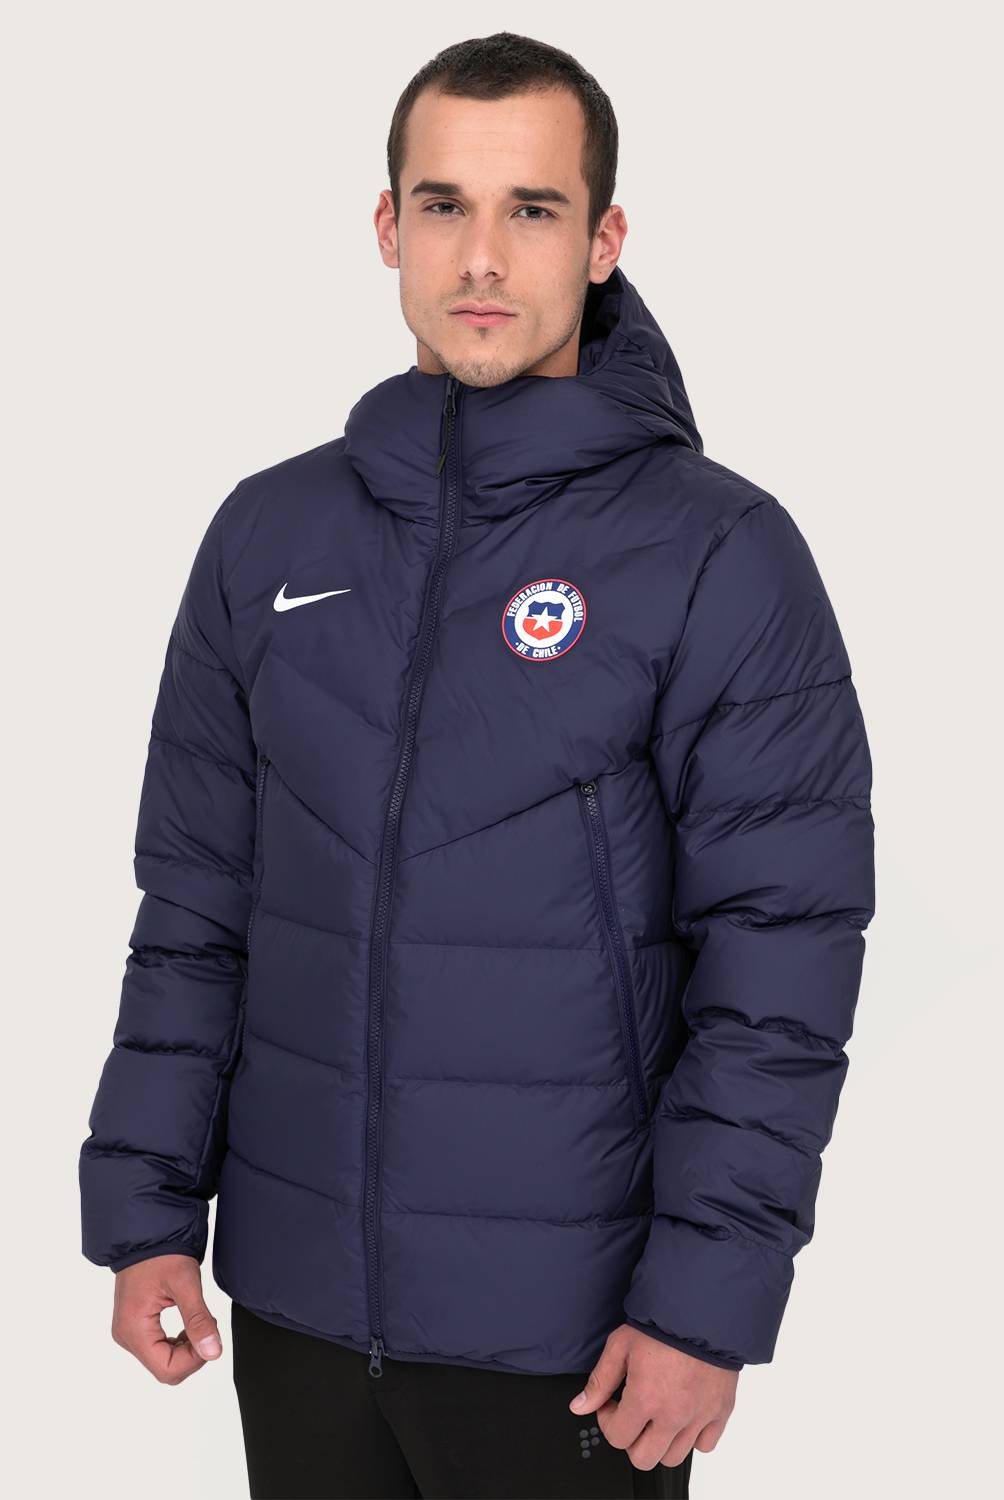 NIKE - Jacket Chile Hombre Fútbol Prematch